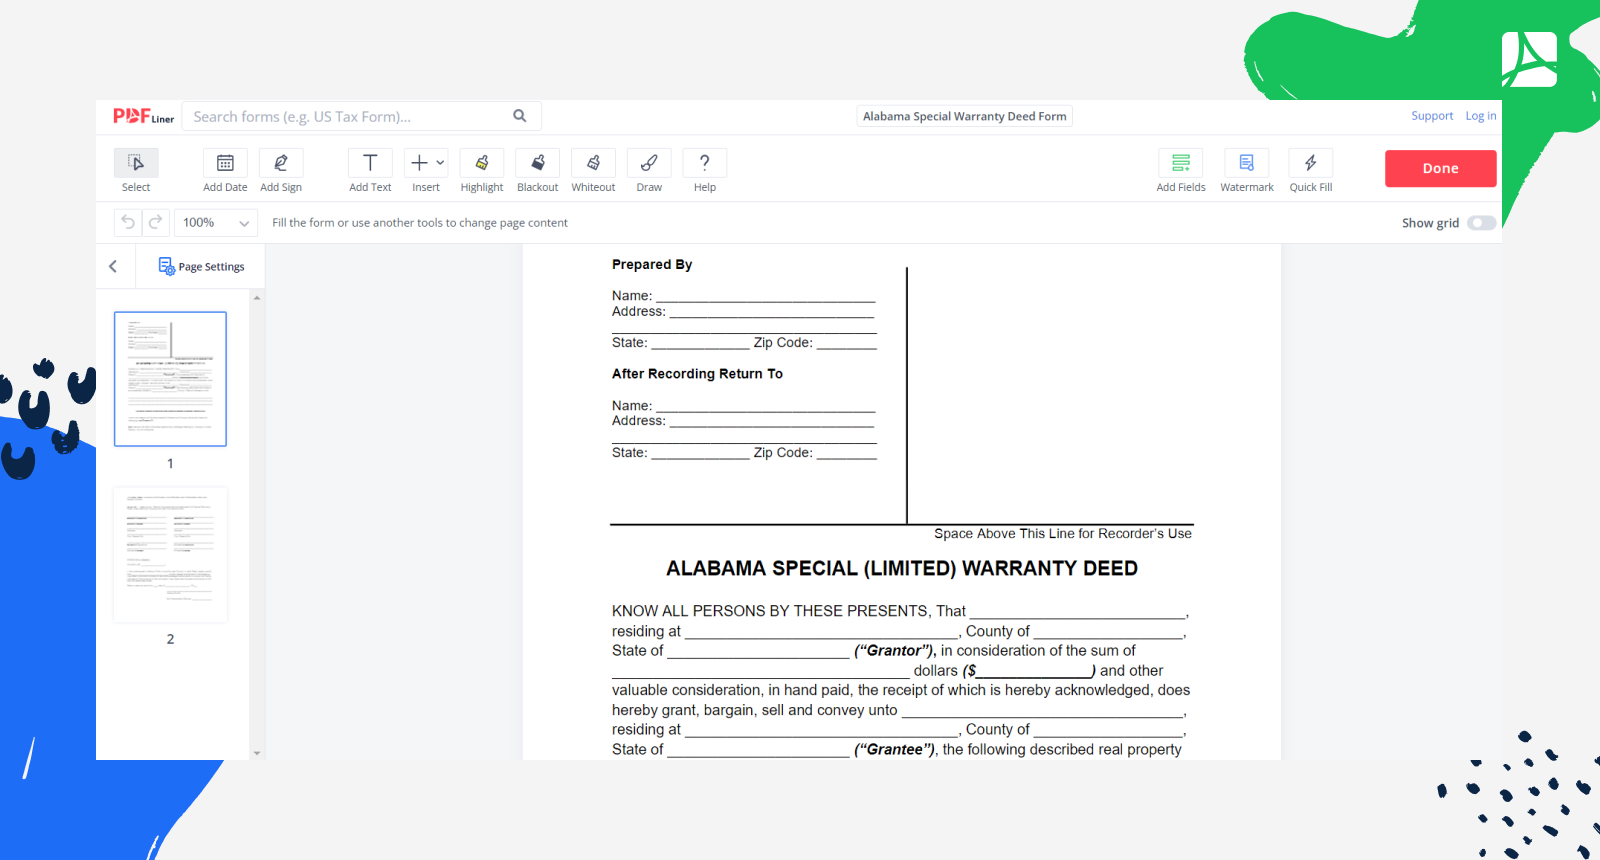 Alabama Special Warranty Deed Form Screenshot